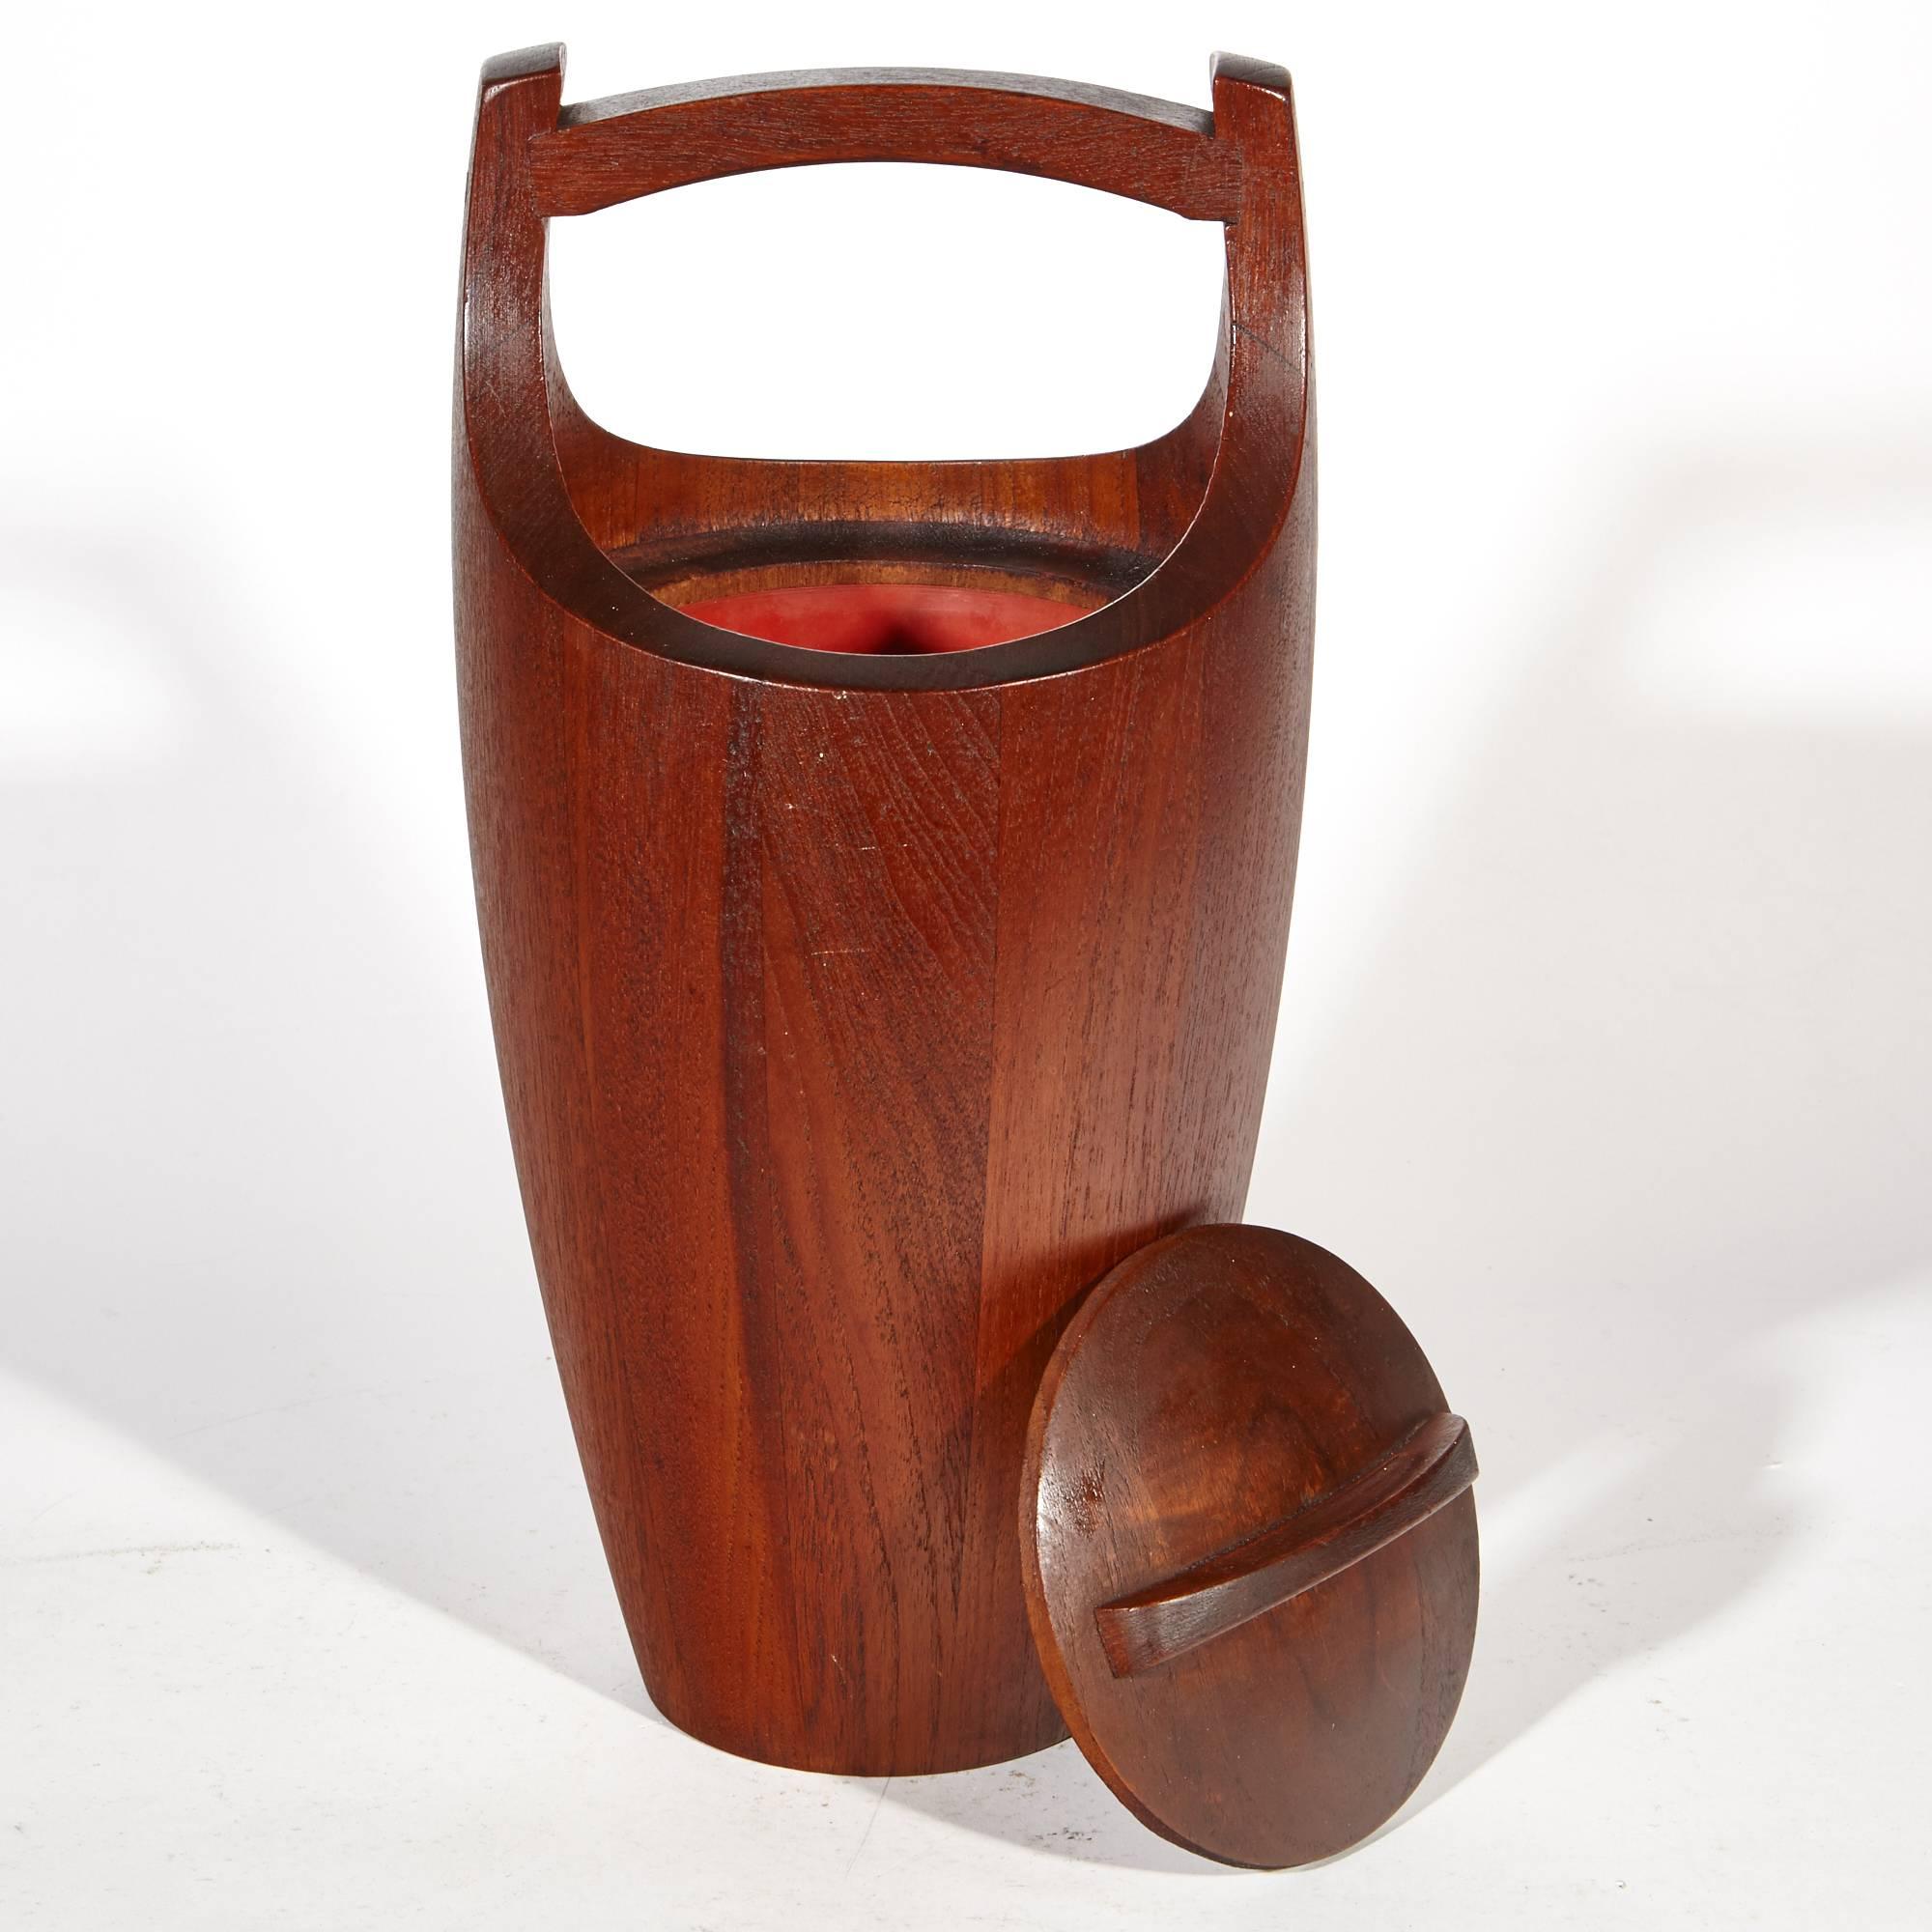 Vintage Danish staved teak wood handled ice bucket designed by Jens Quistgaard, circa 1950s. Marked underneath.